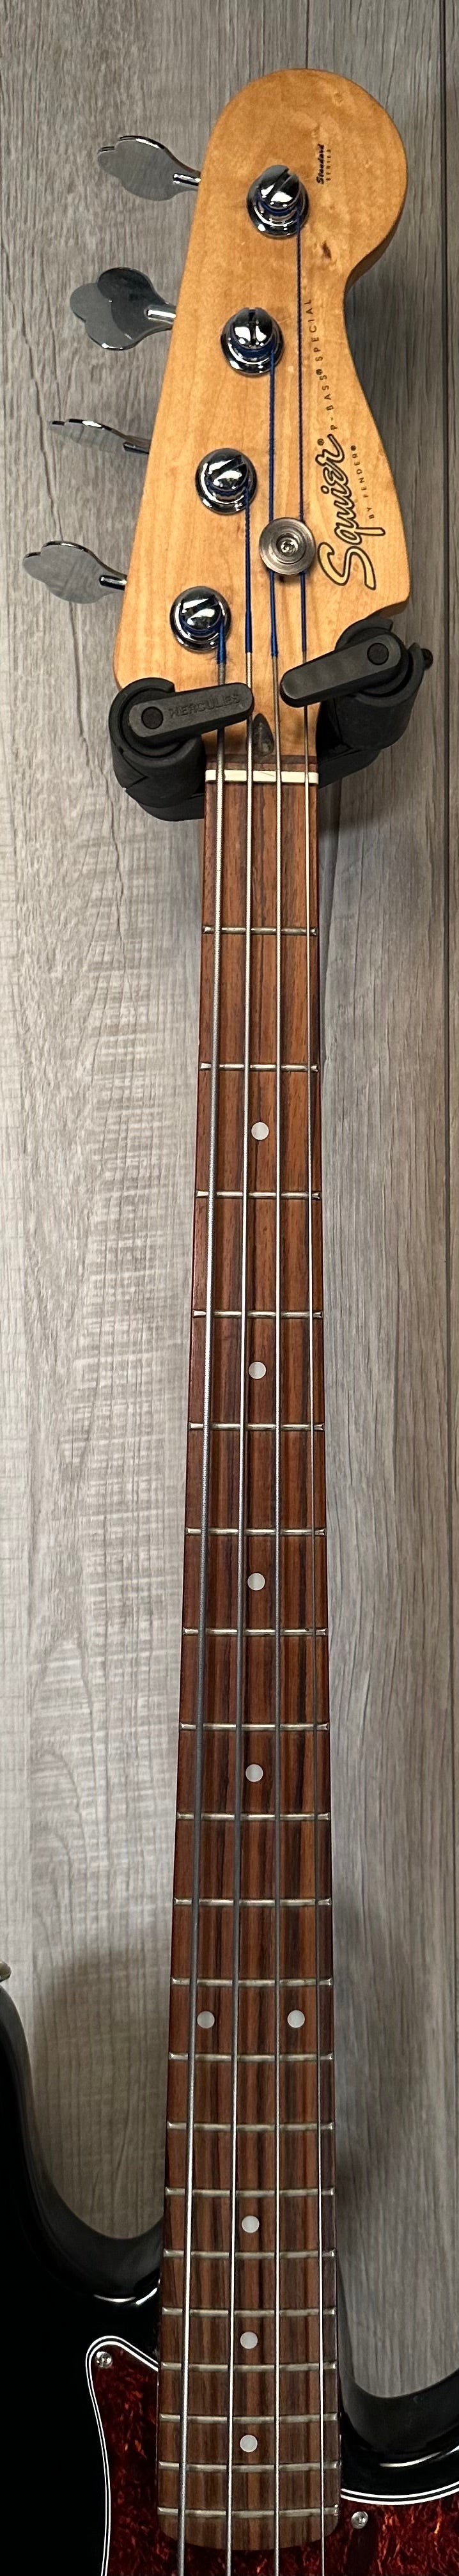 Neck of Used 1999 Squier Precision Bass Special Black w/Bartonlini Bridge Pickup TSS3836